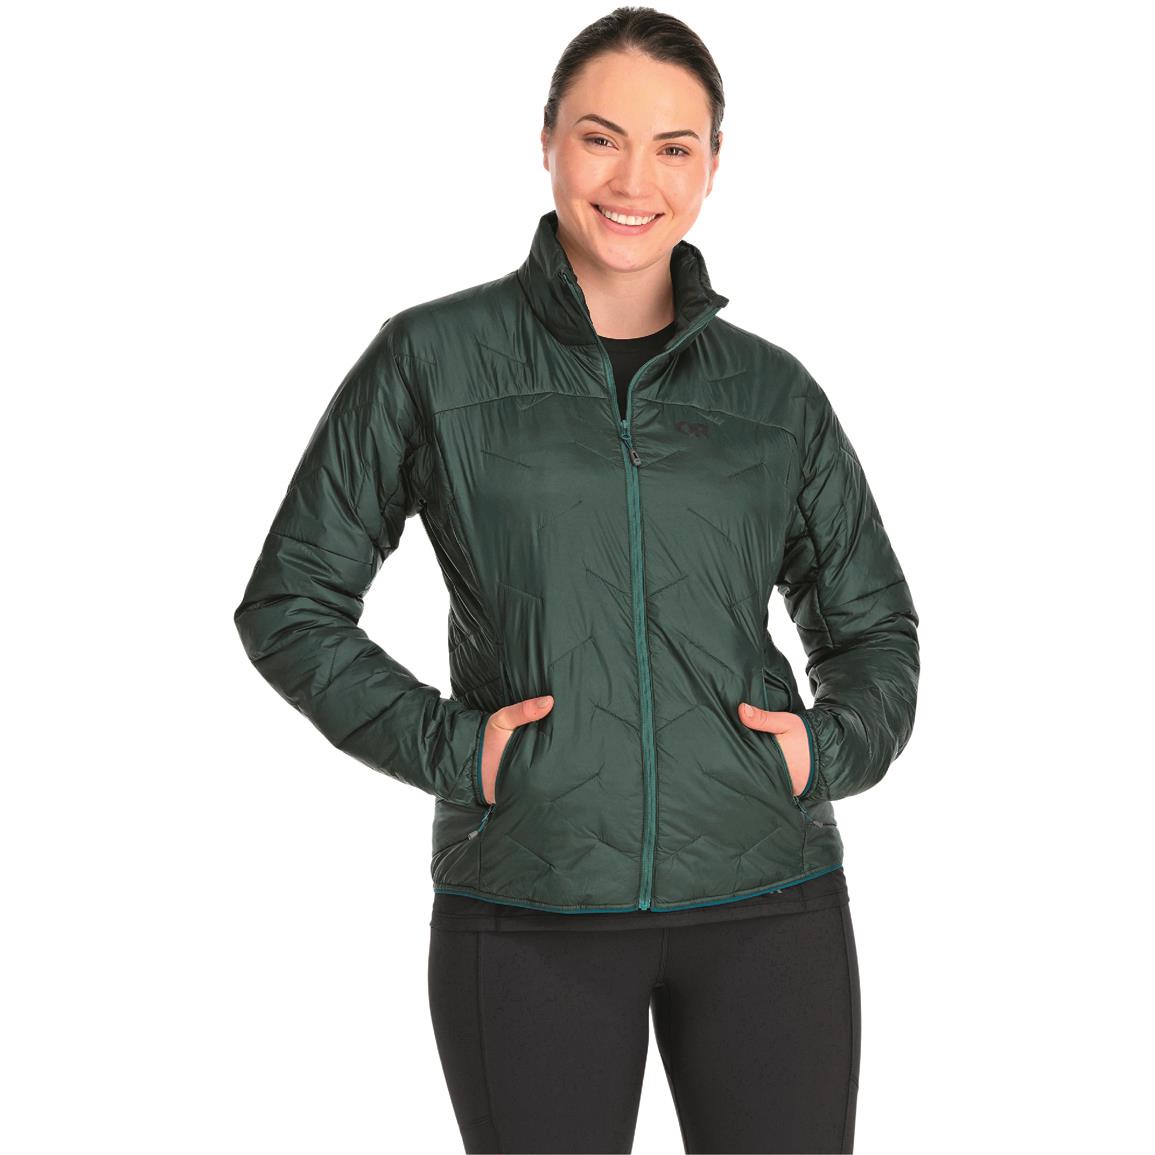 Outdoor Research Women's SuperStrand LT Insulated Jacket, Treeline